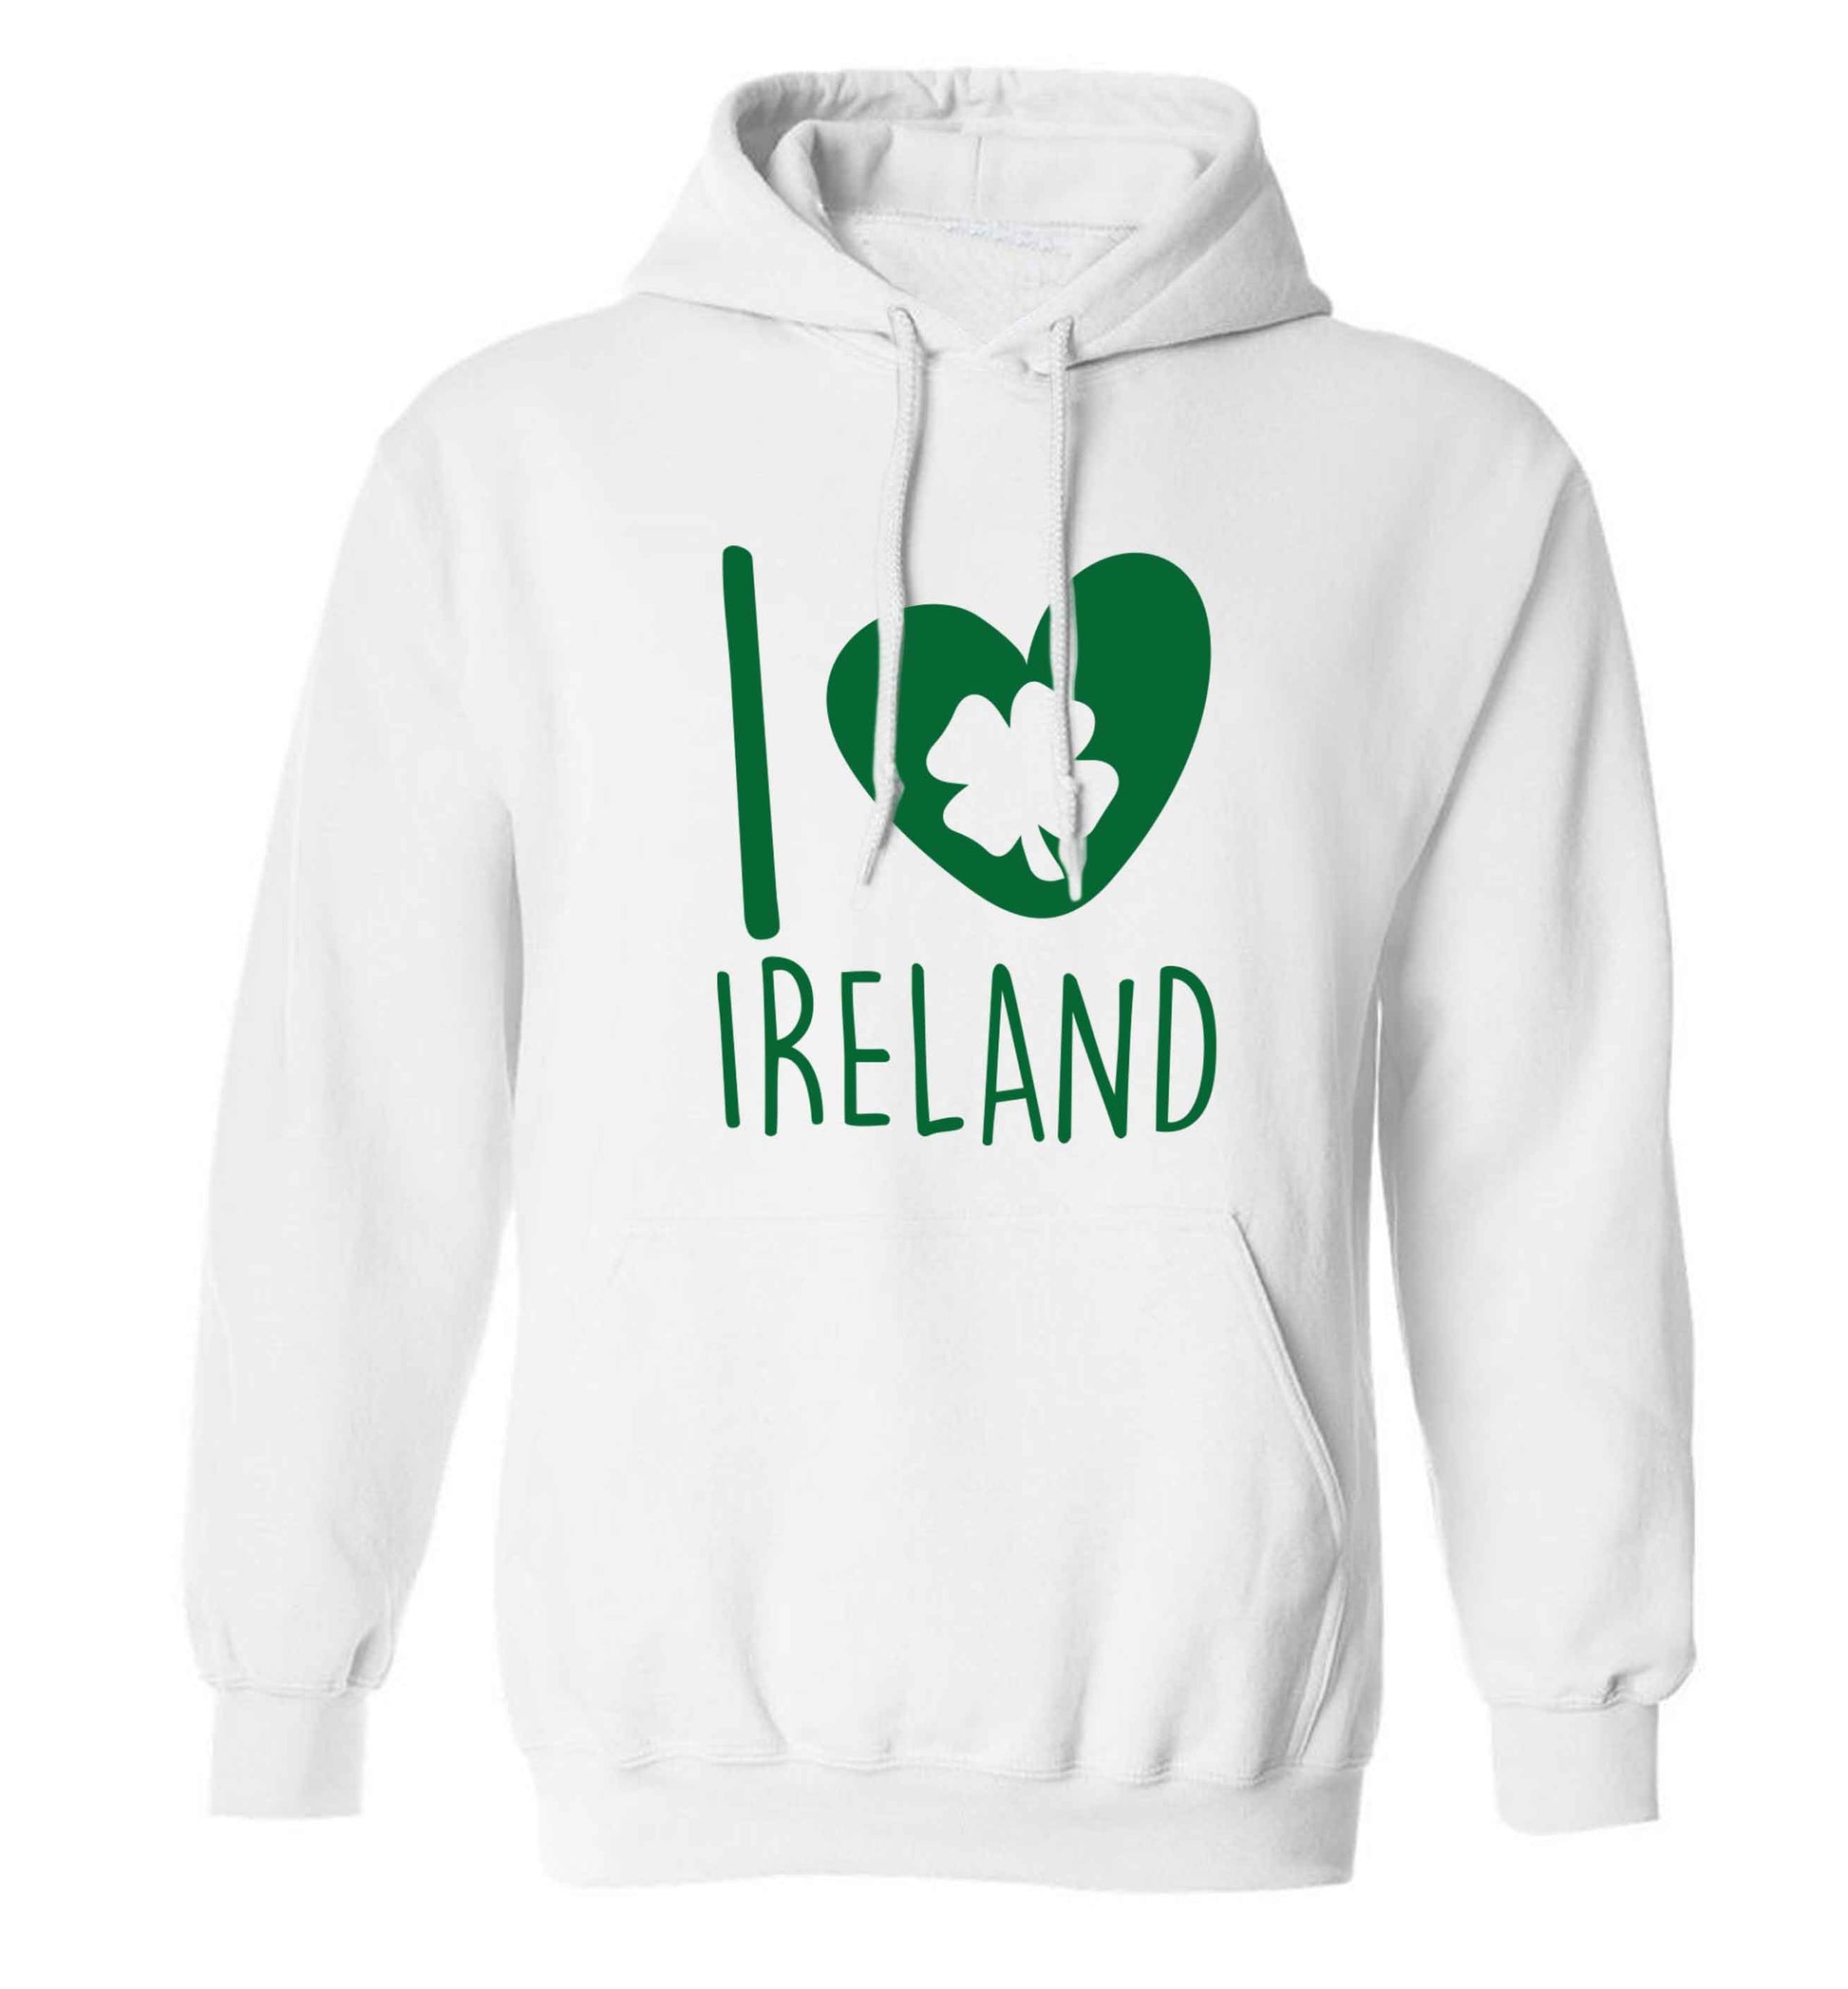 I love Ireland adults unisex white hoodie 2XL